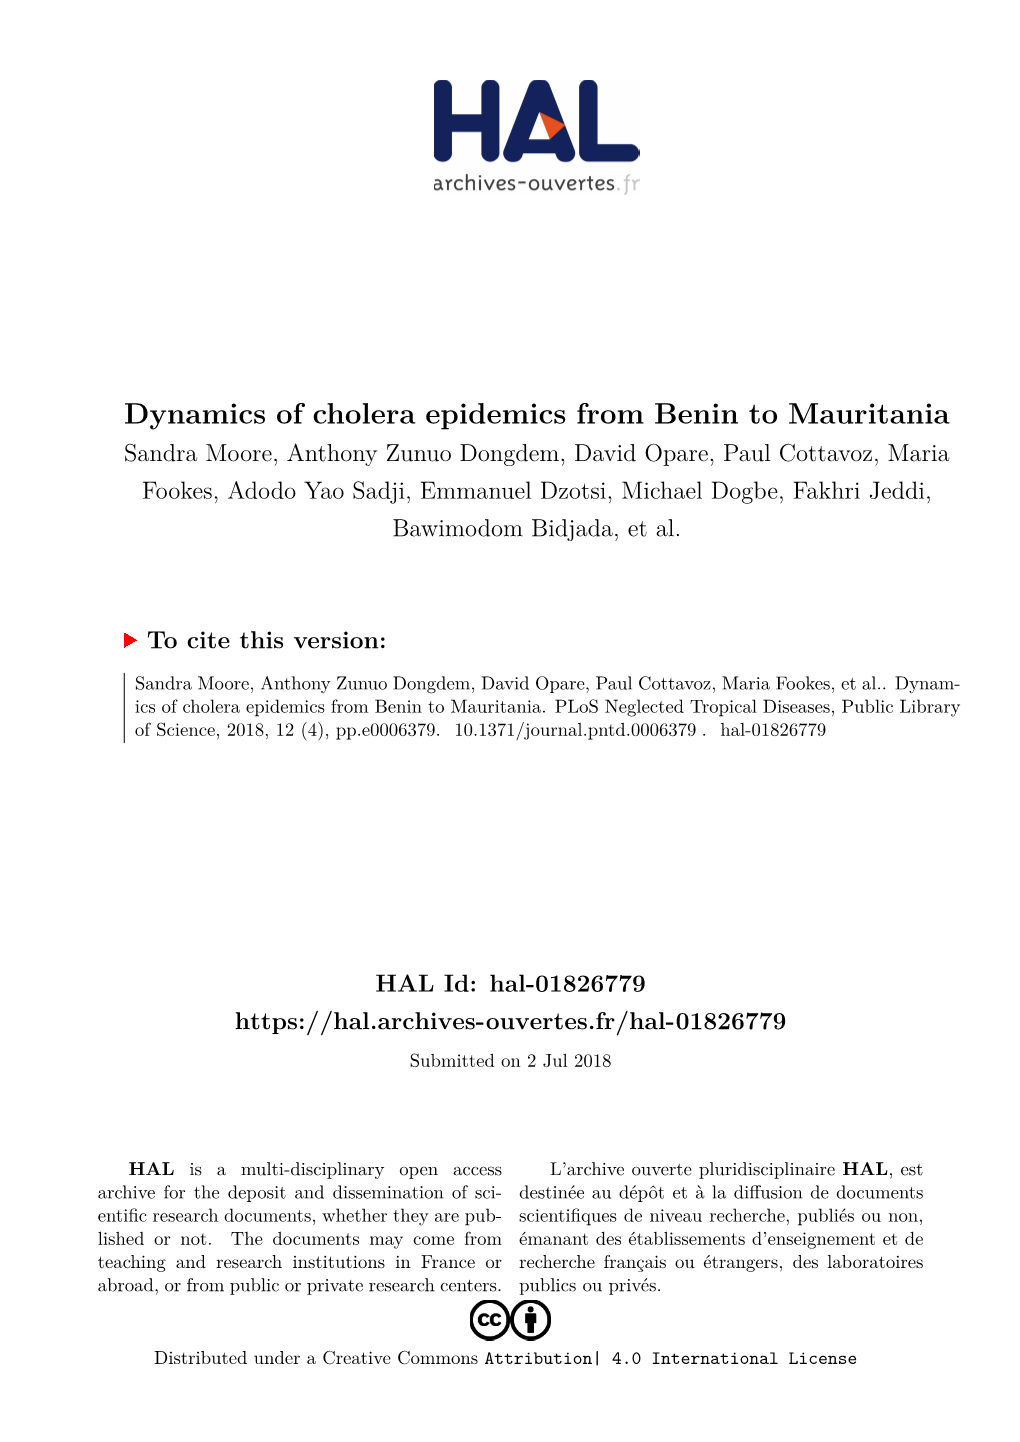 Dynamics of Cholera Epidemics from Benin to Mauritania